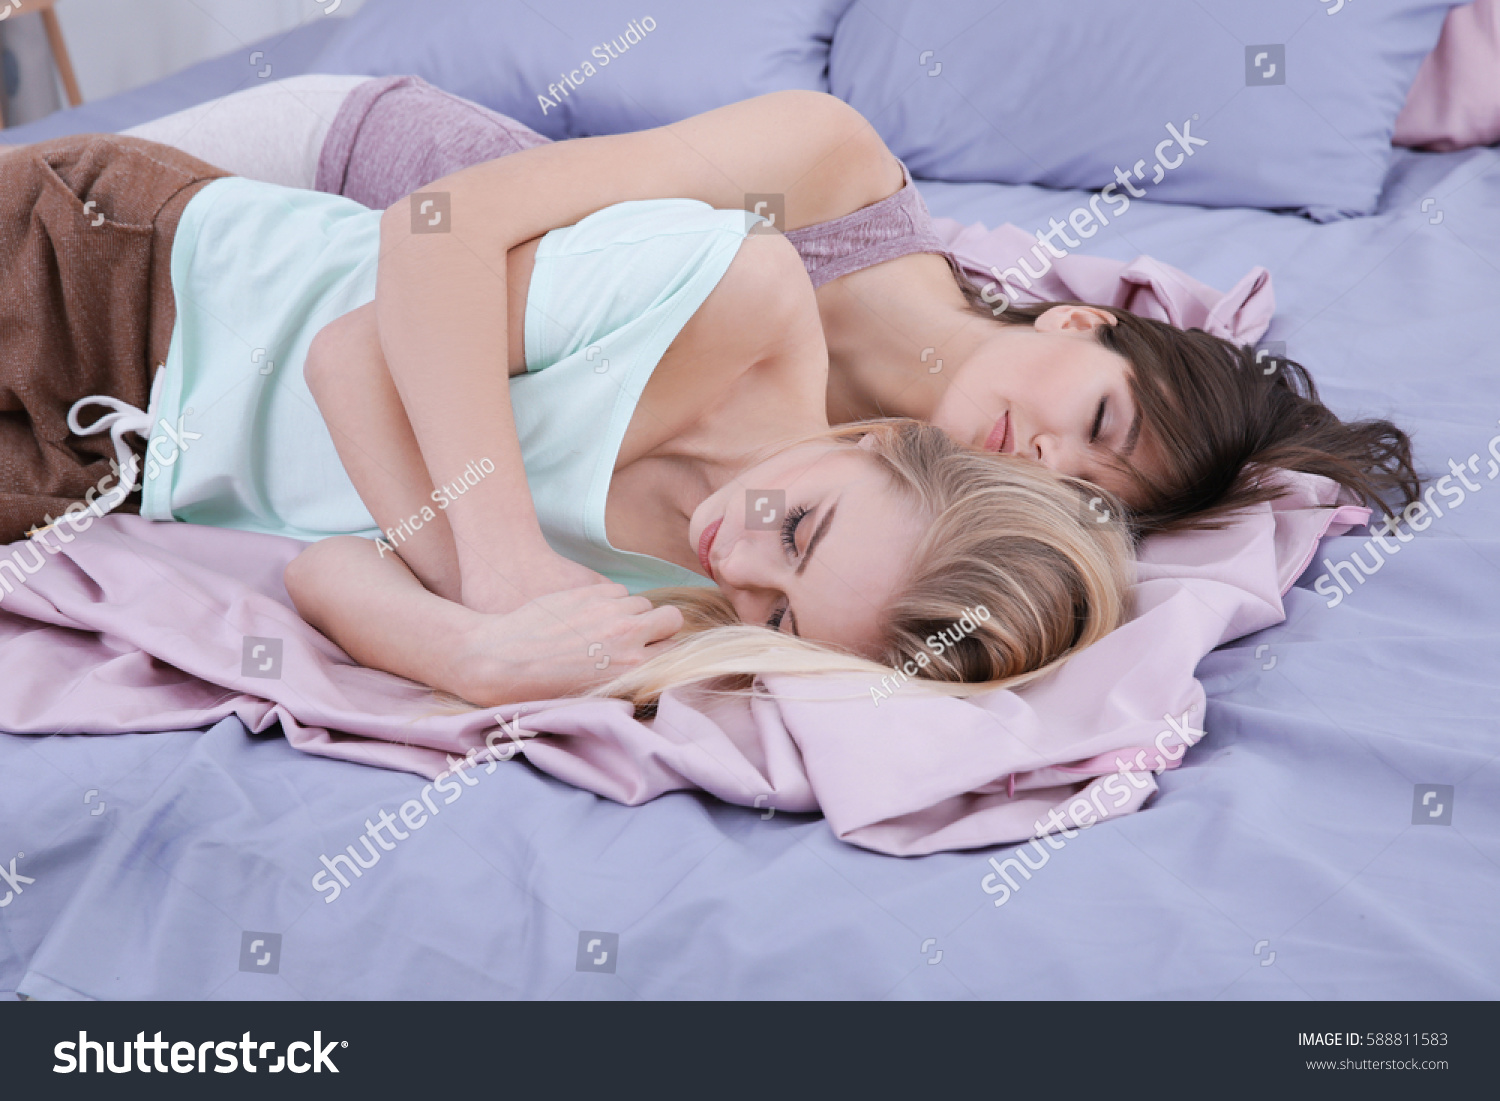 daljeet singh recommends sleeping lesbian sex videos pic